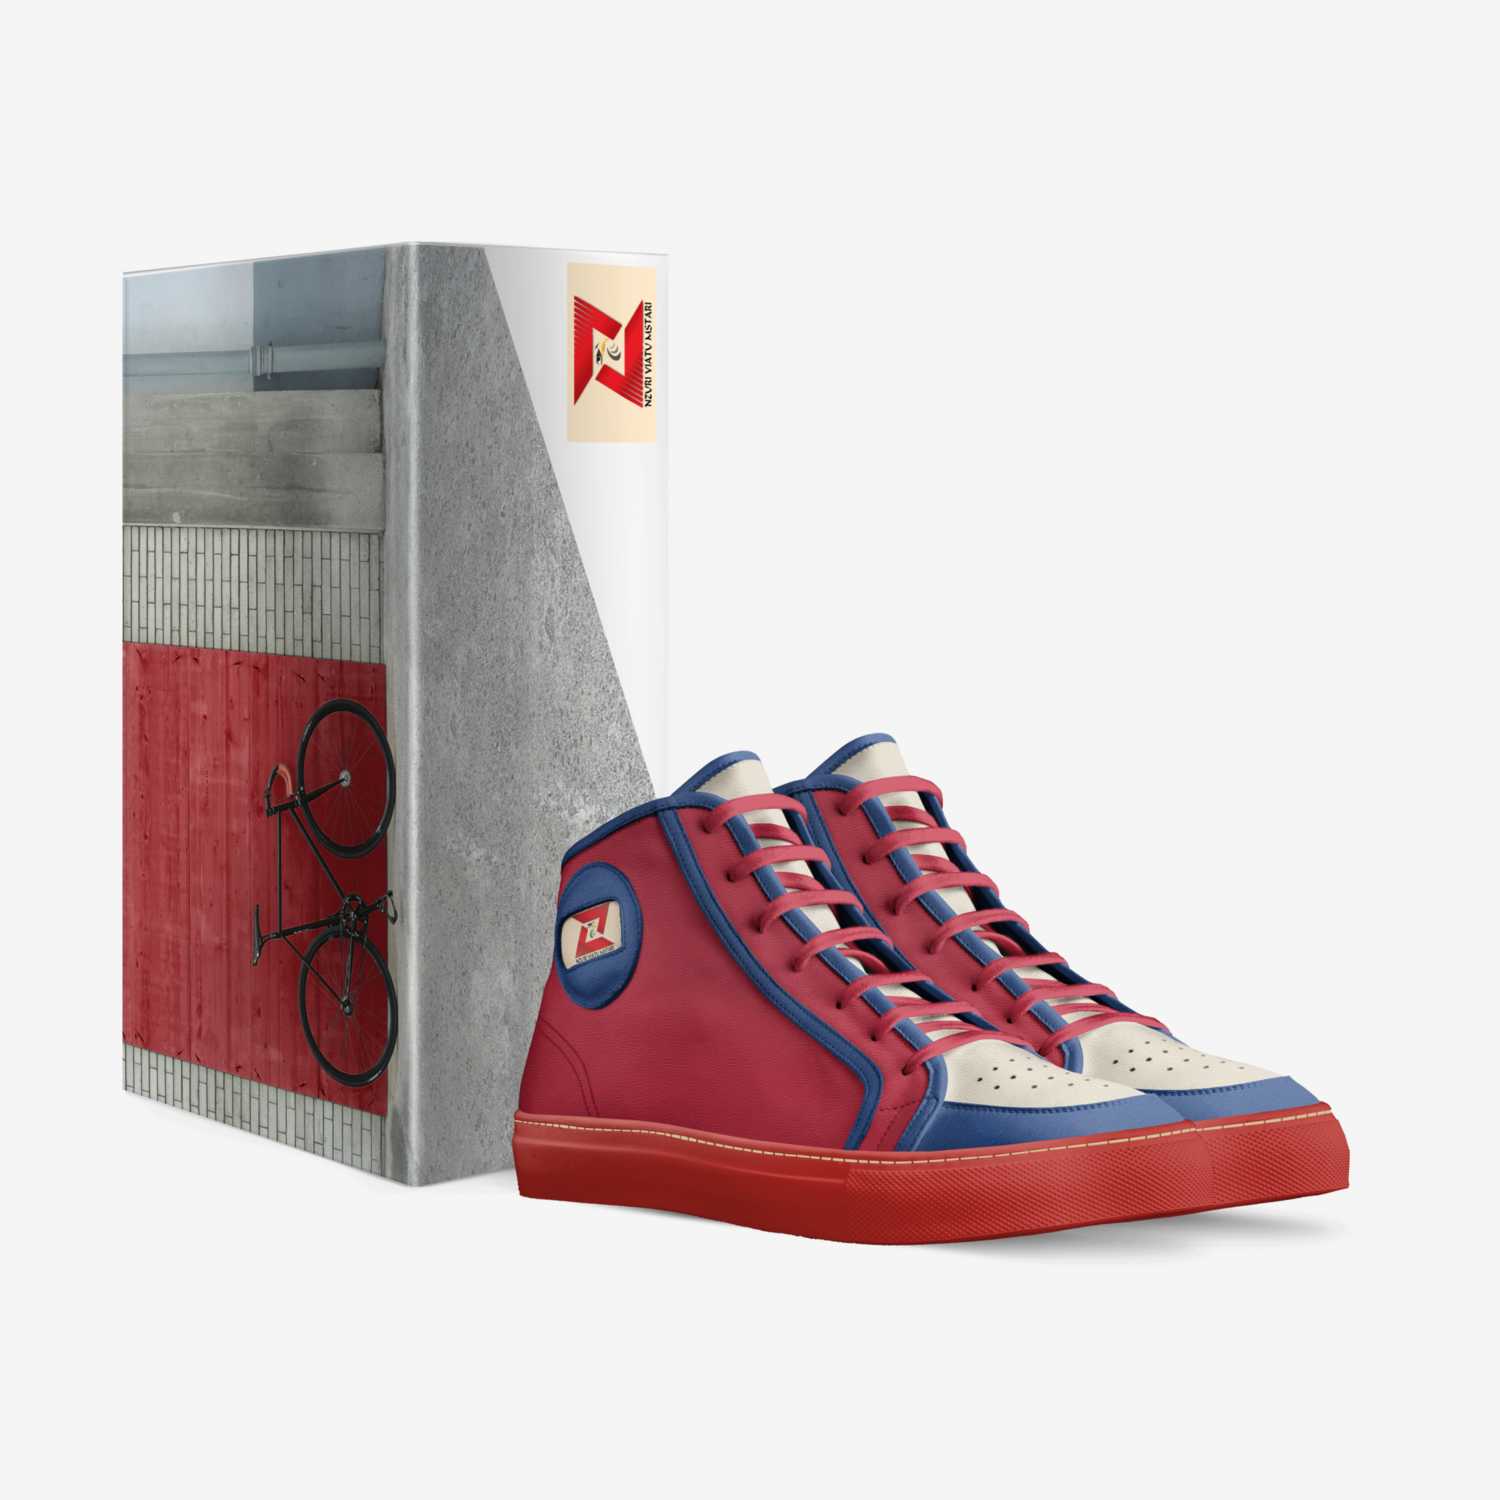 Nzuri Viatu MVP custom made in Italy shoes by Travis Cyntell | Box view